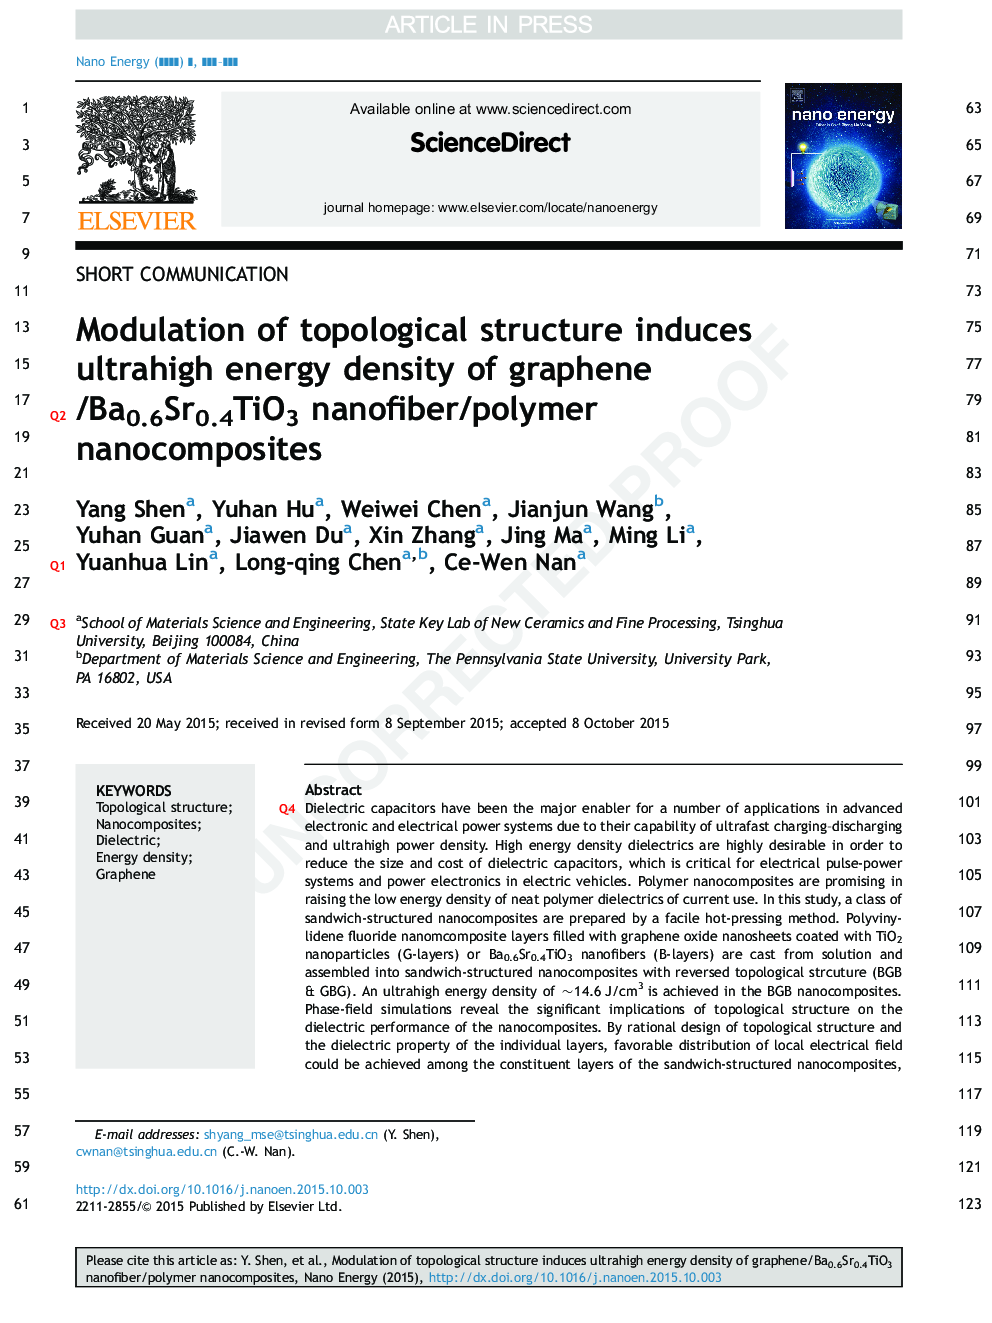 Modulation of topological structure induces ultrahigh energy density of graphene/Ba0.6Sr0.4TiO3 nanofiber/polymer nanocomposites